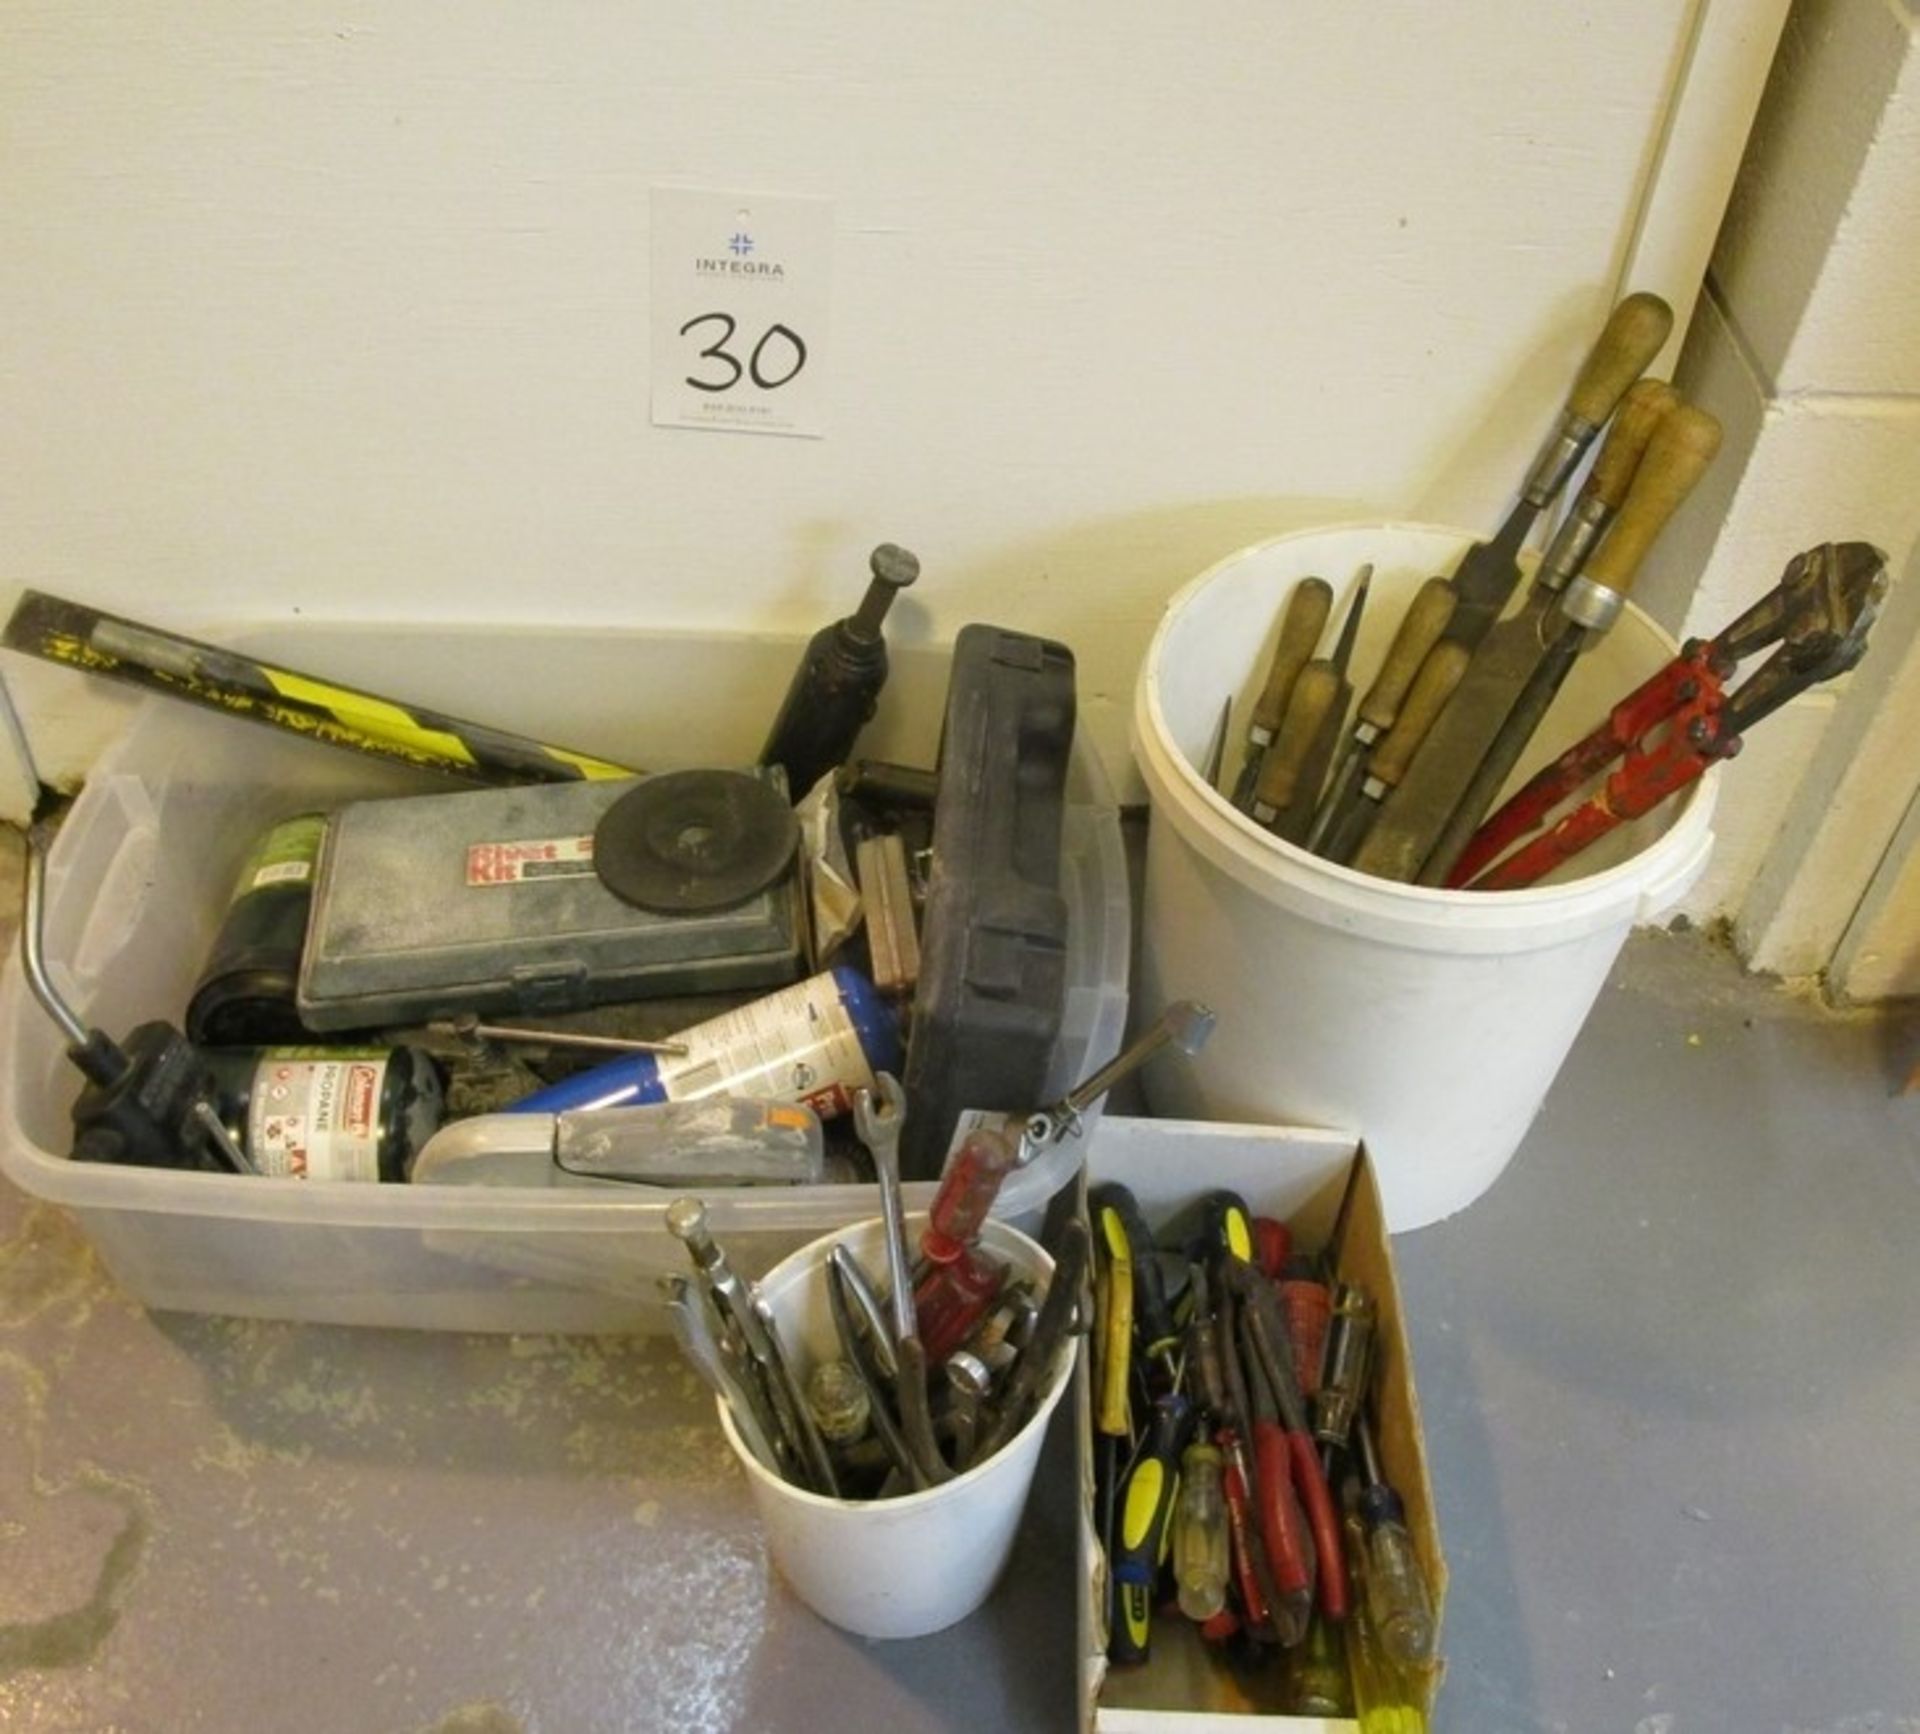 Assorted Shop Tools Including Files, Wrenches, Screwdrivers, Rivet Gun